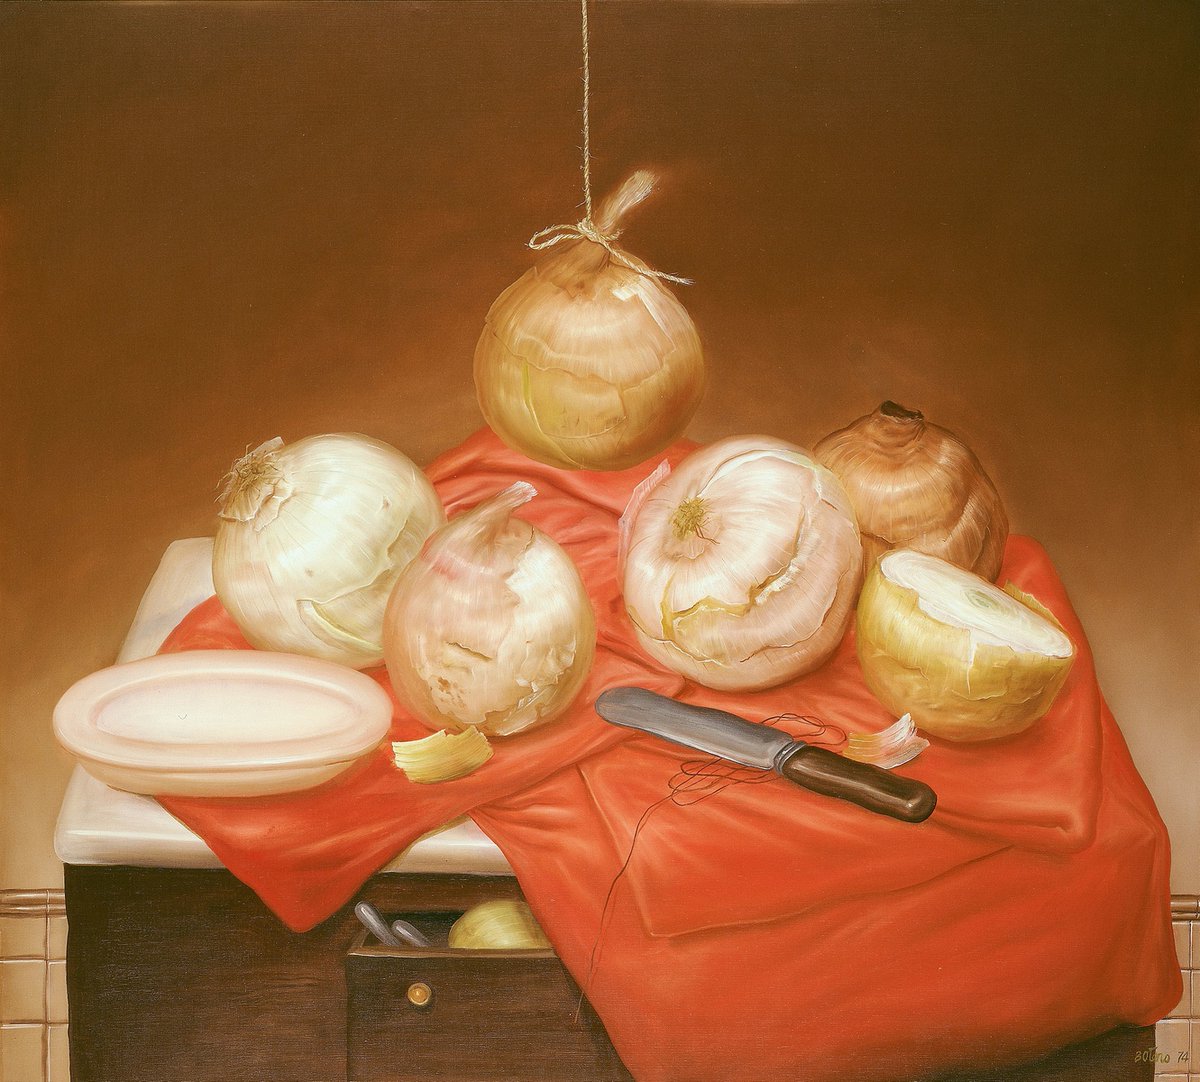 Fernando Botero, Still Life with Onions, 1974 #fernandobotero #contemporaryart artic.edu/artworks/11096…